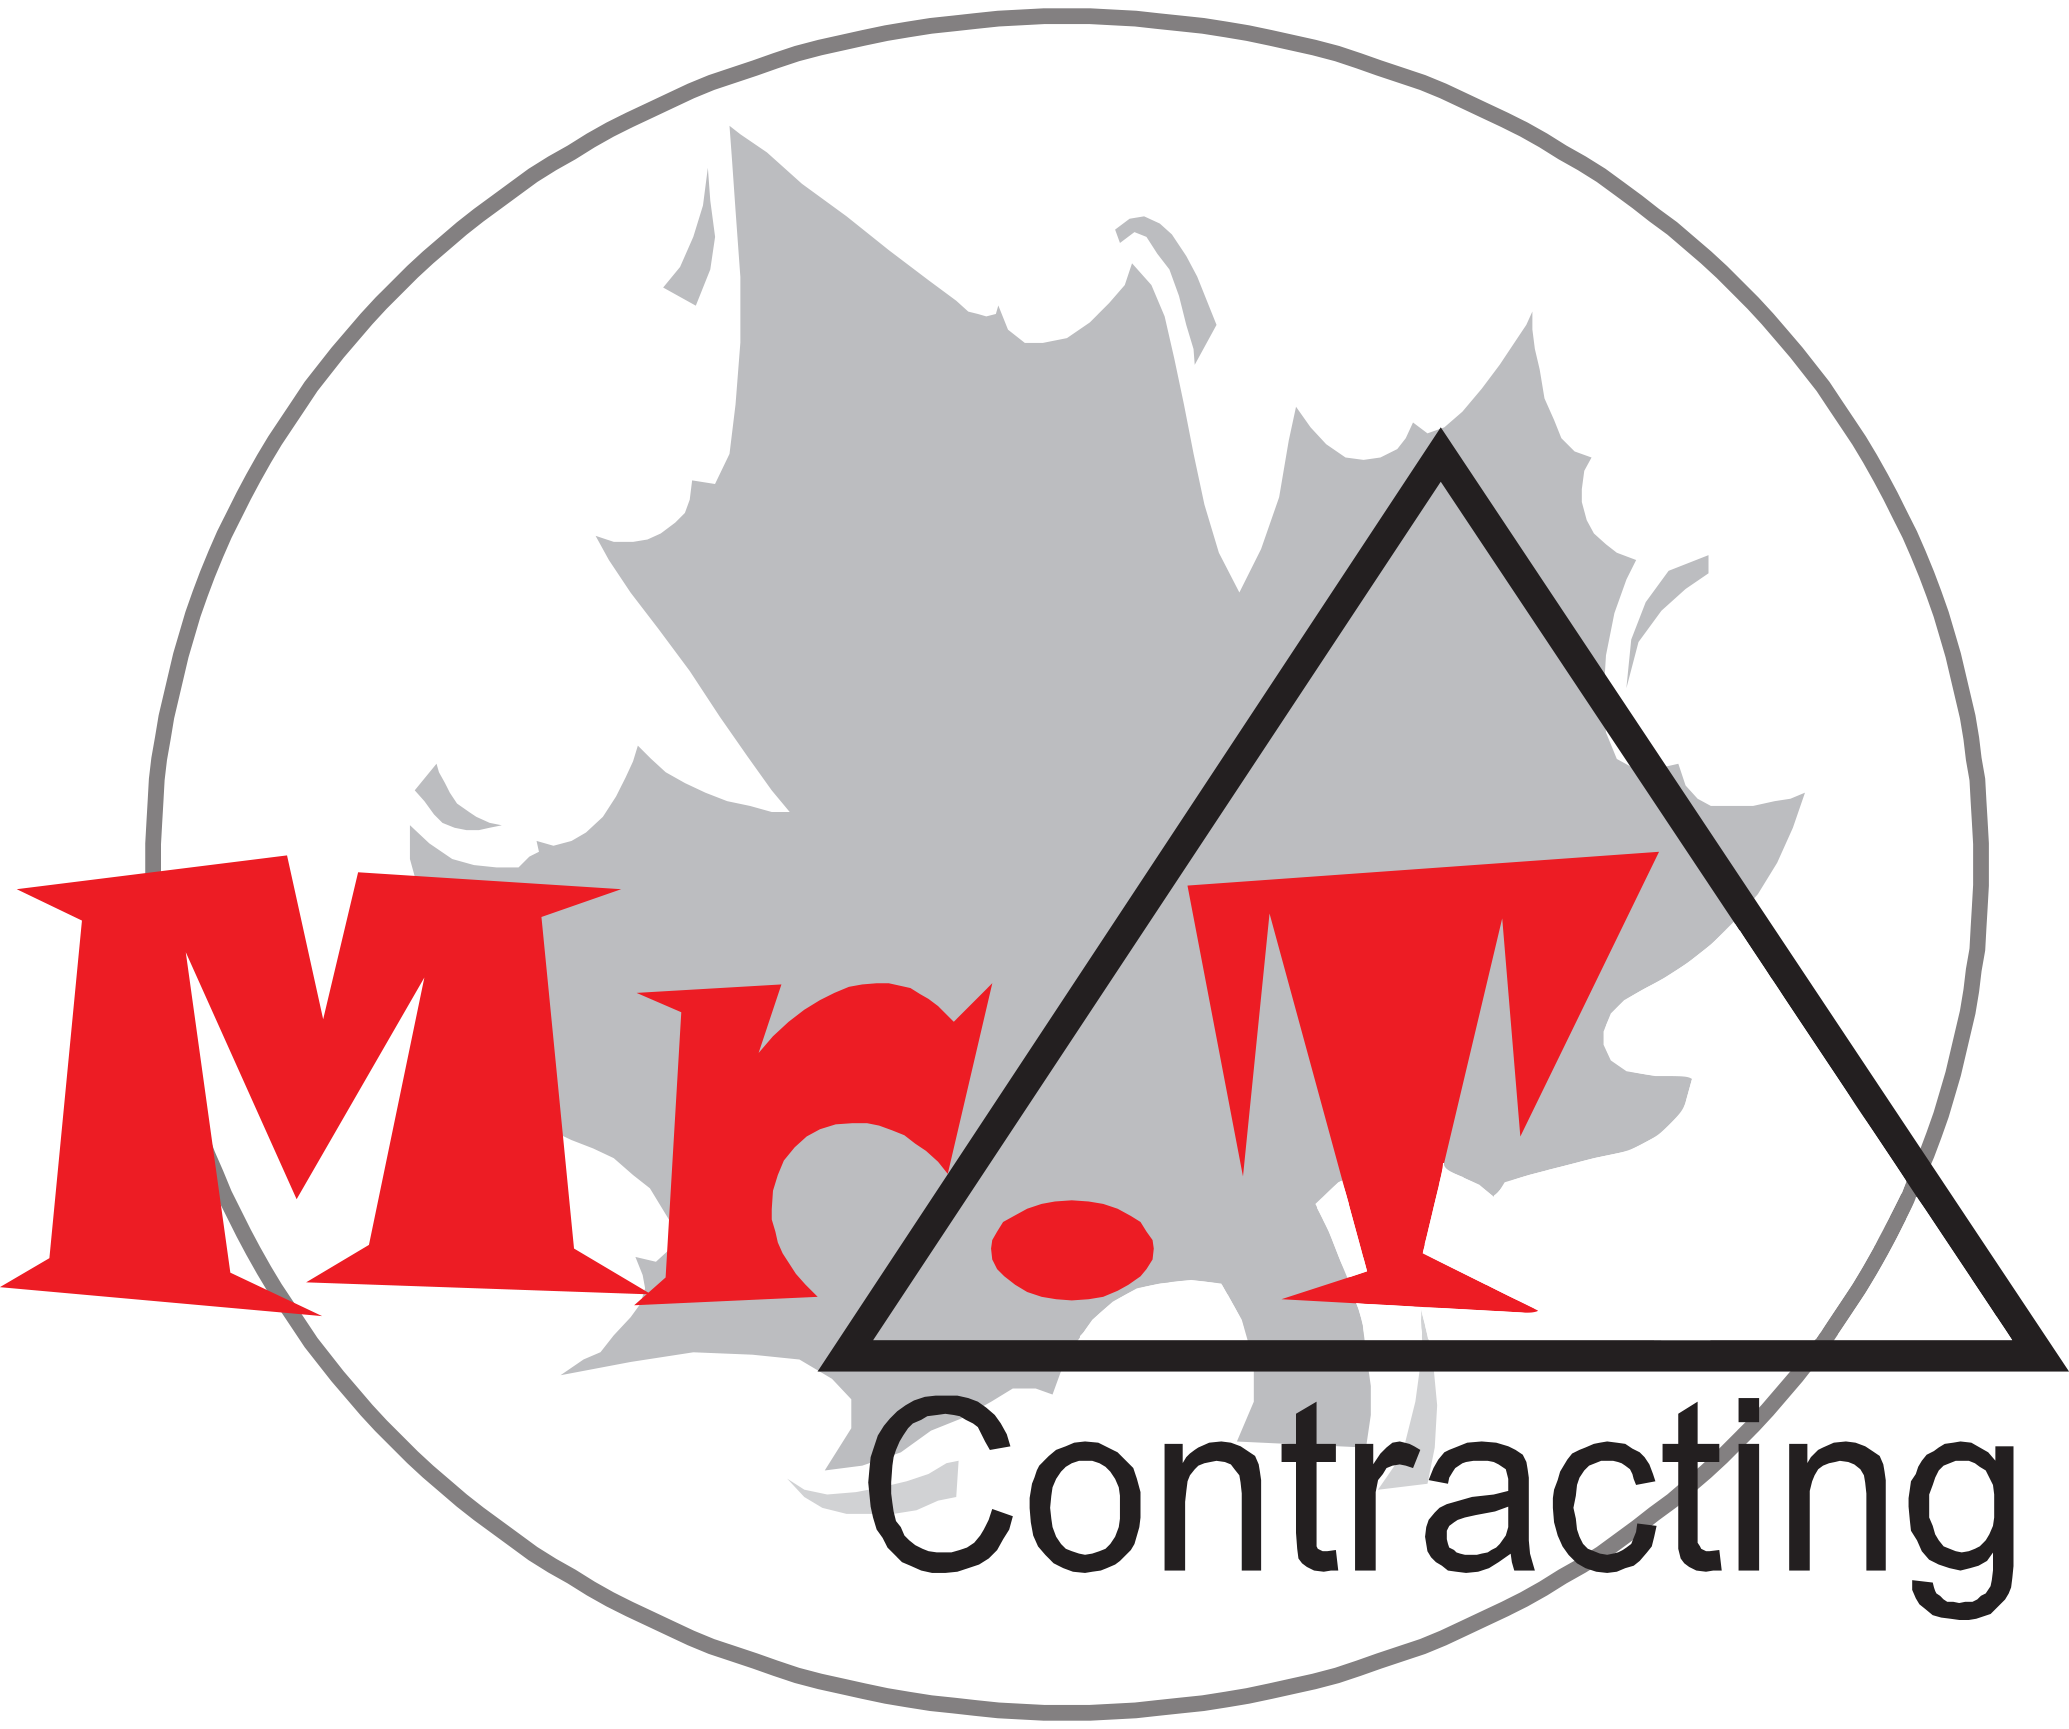 mrt logo2.png